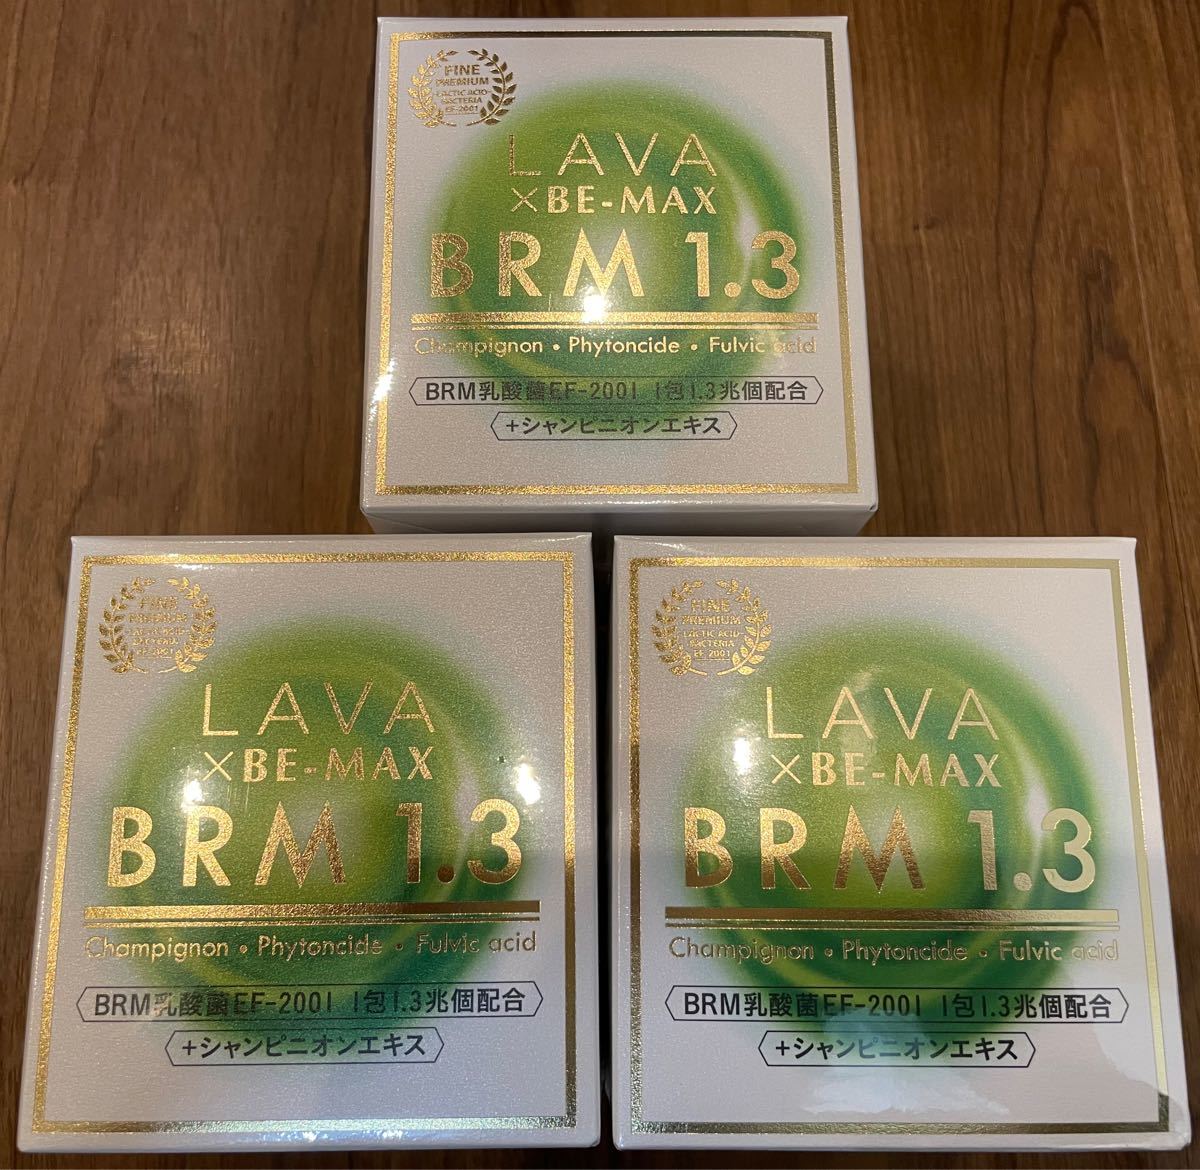 BRM1.3 LAVA 乳酸菌 50包 ベルム1.3 - 健康用品